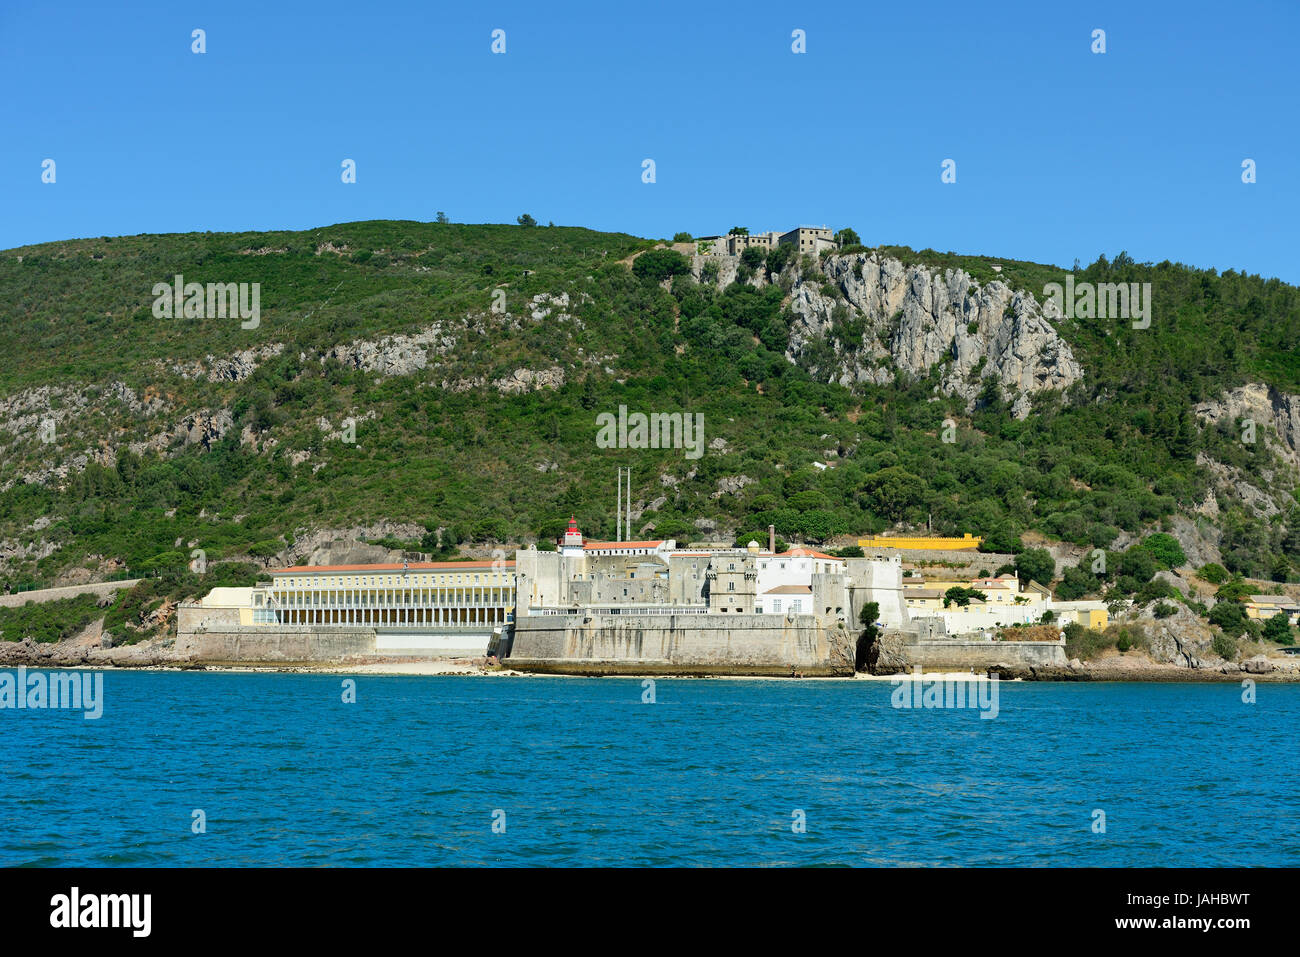 Outão fortress facing the Atlantic Ocean and the Sado river. Portugal Stock Photo